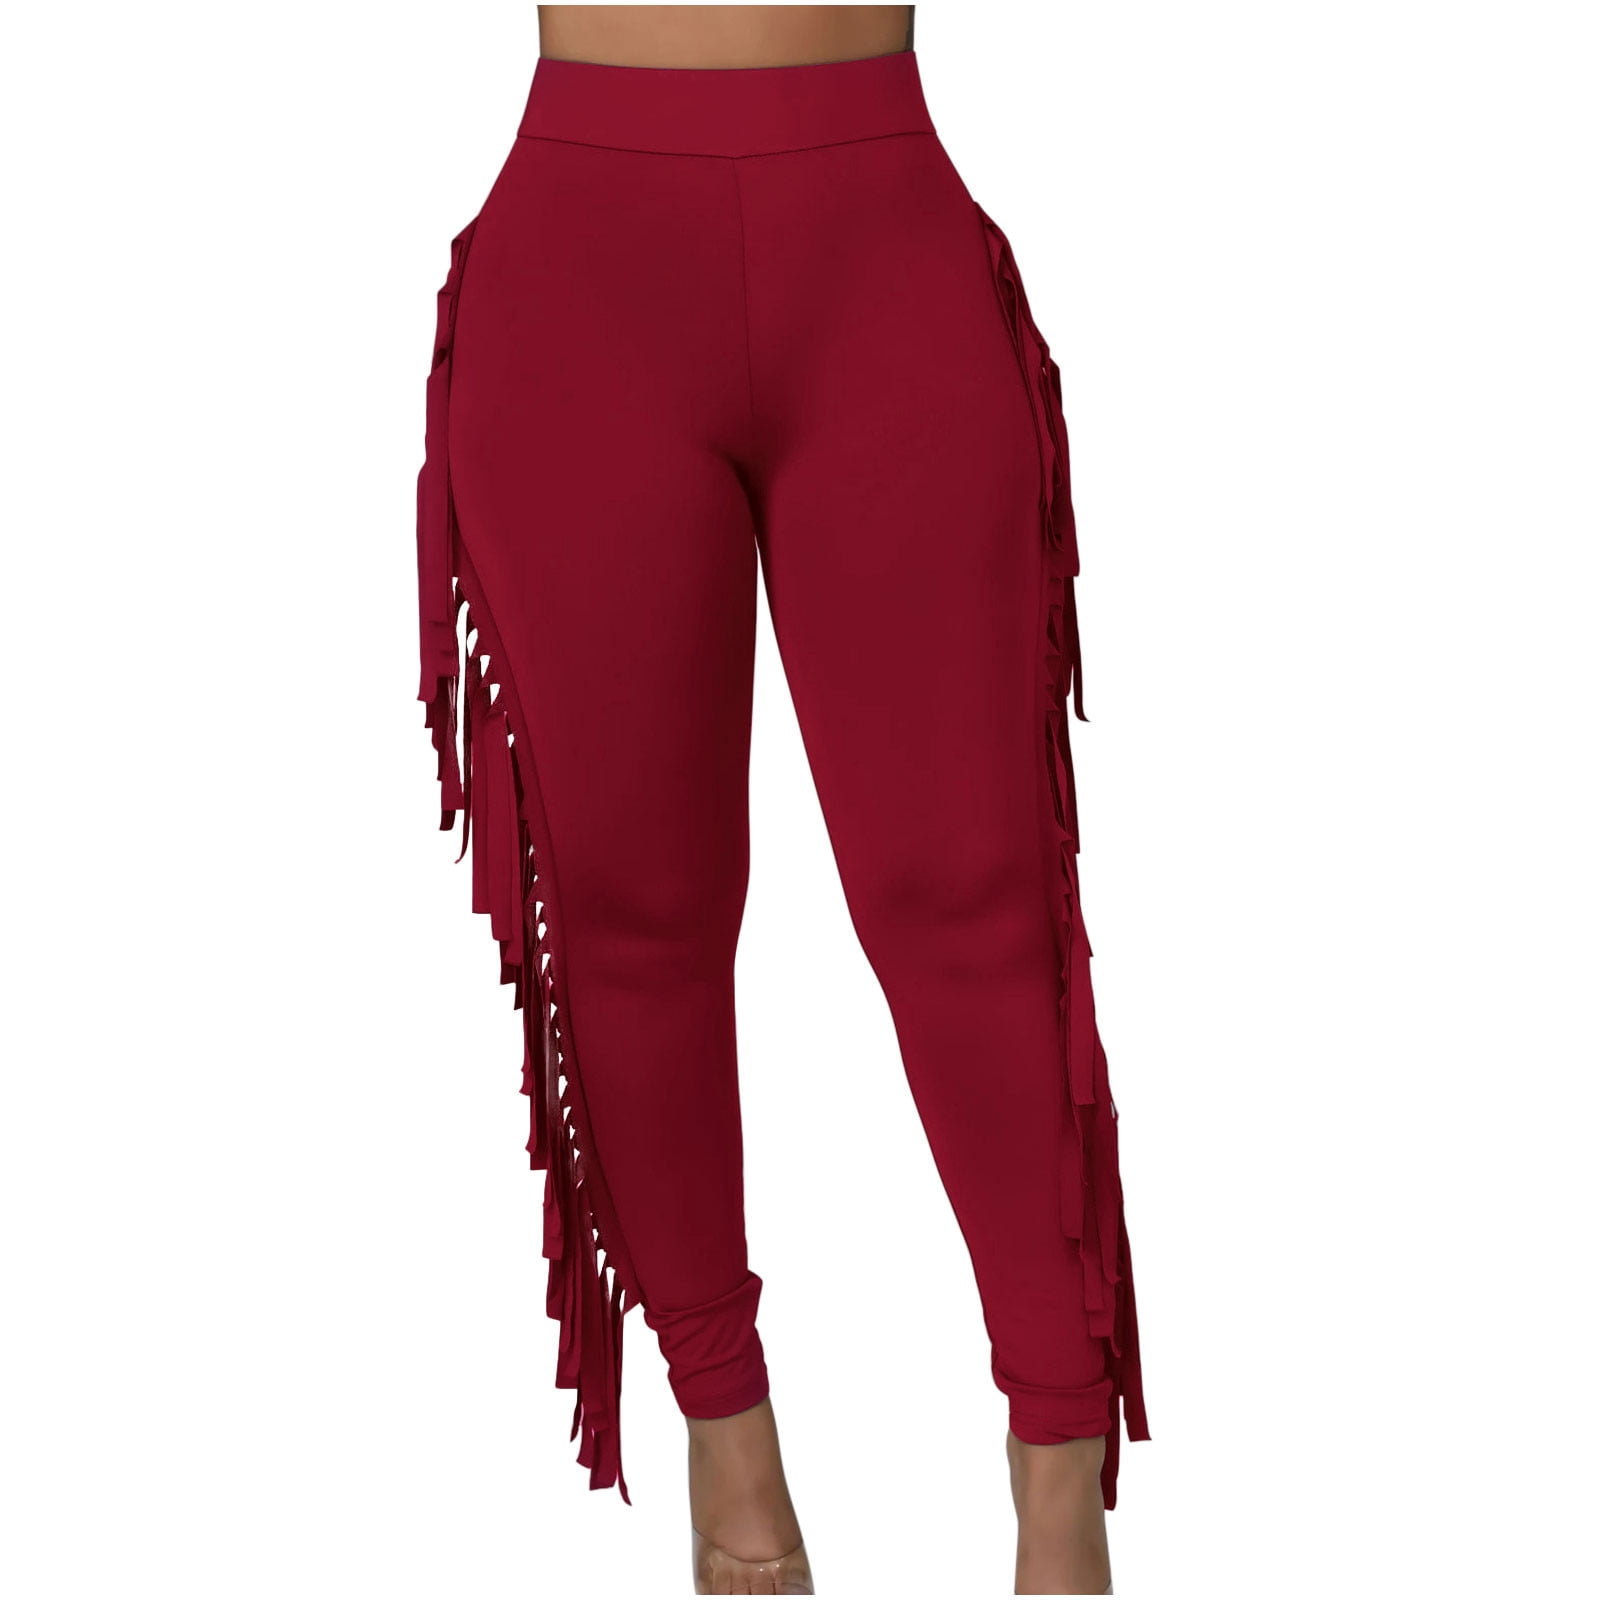 JGTDBPO Fringe Pants For Women Casual High Waist Solid Bodycon Side Tassel  Pants Yoga Pants Sweatpants Bandage Pants 